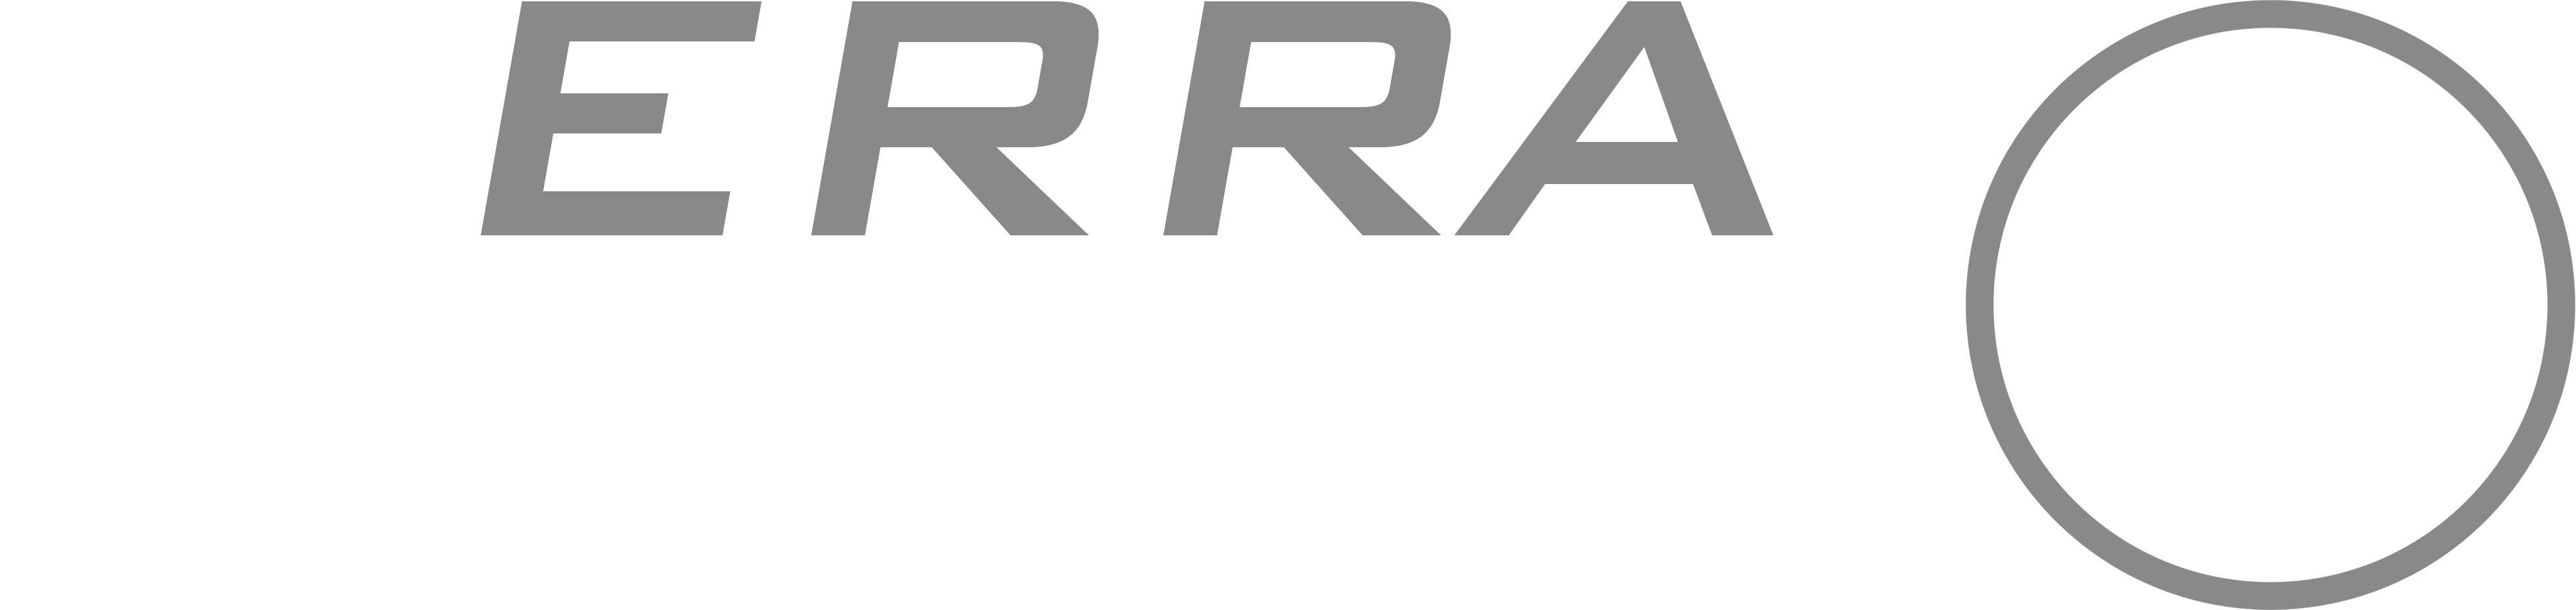 TERRA-TOOLS лого